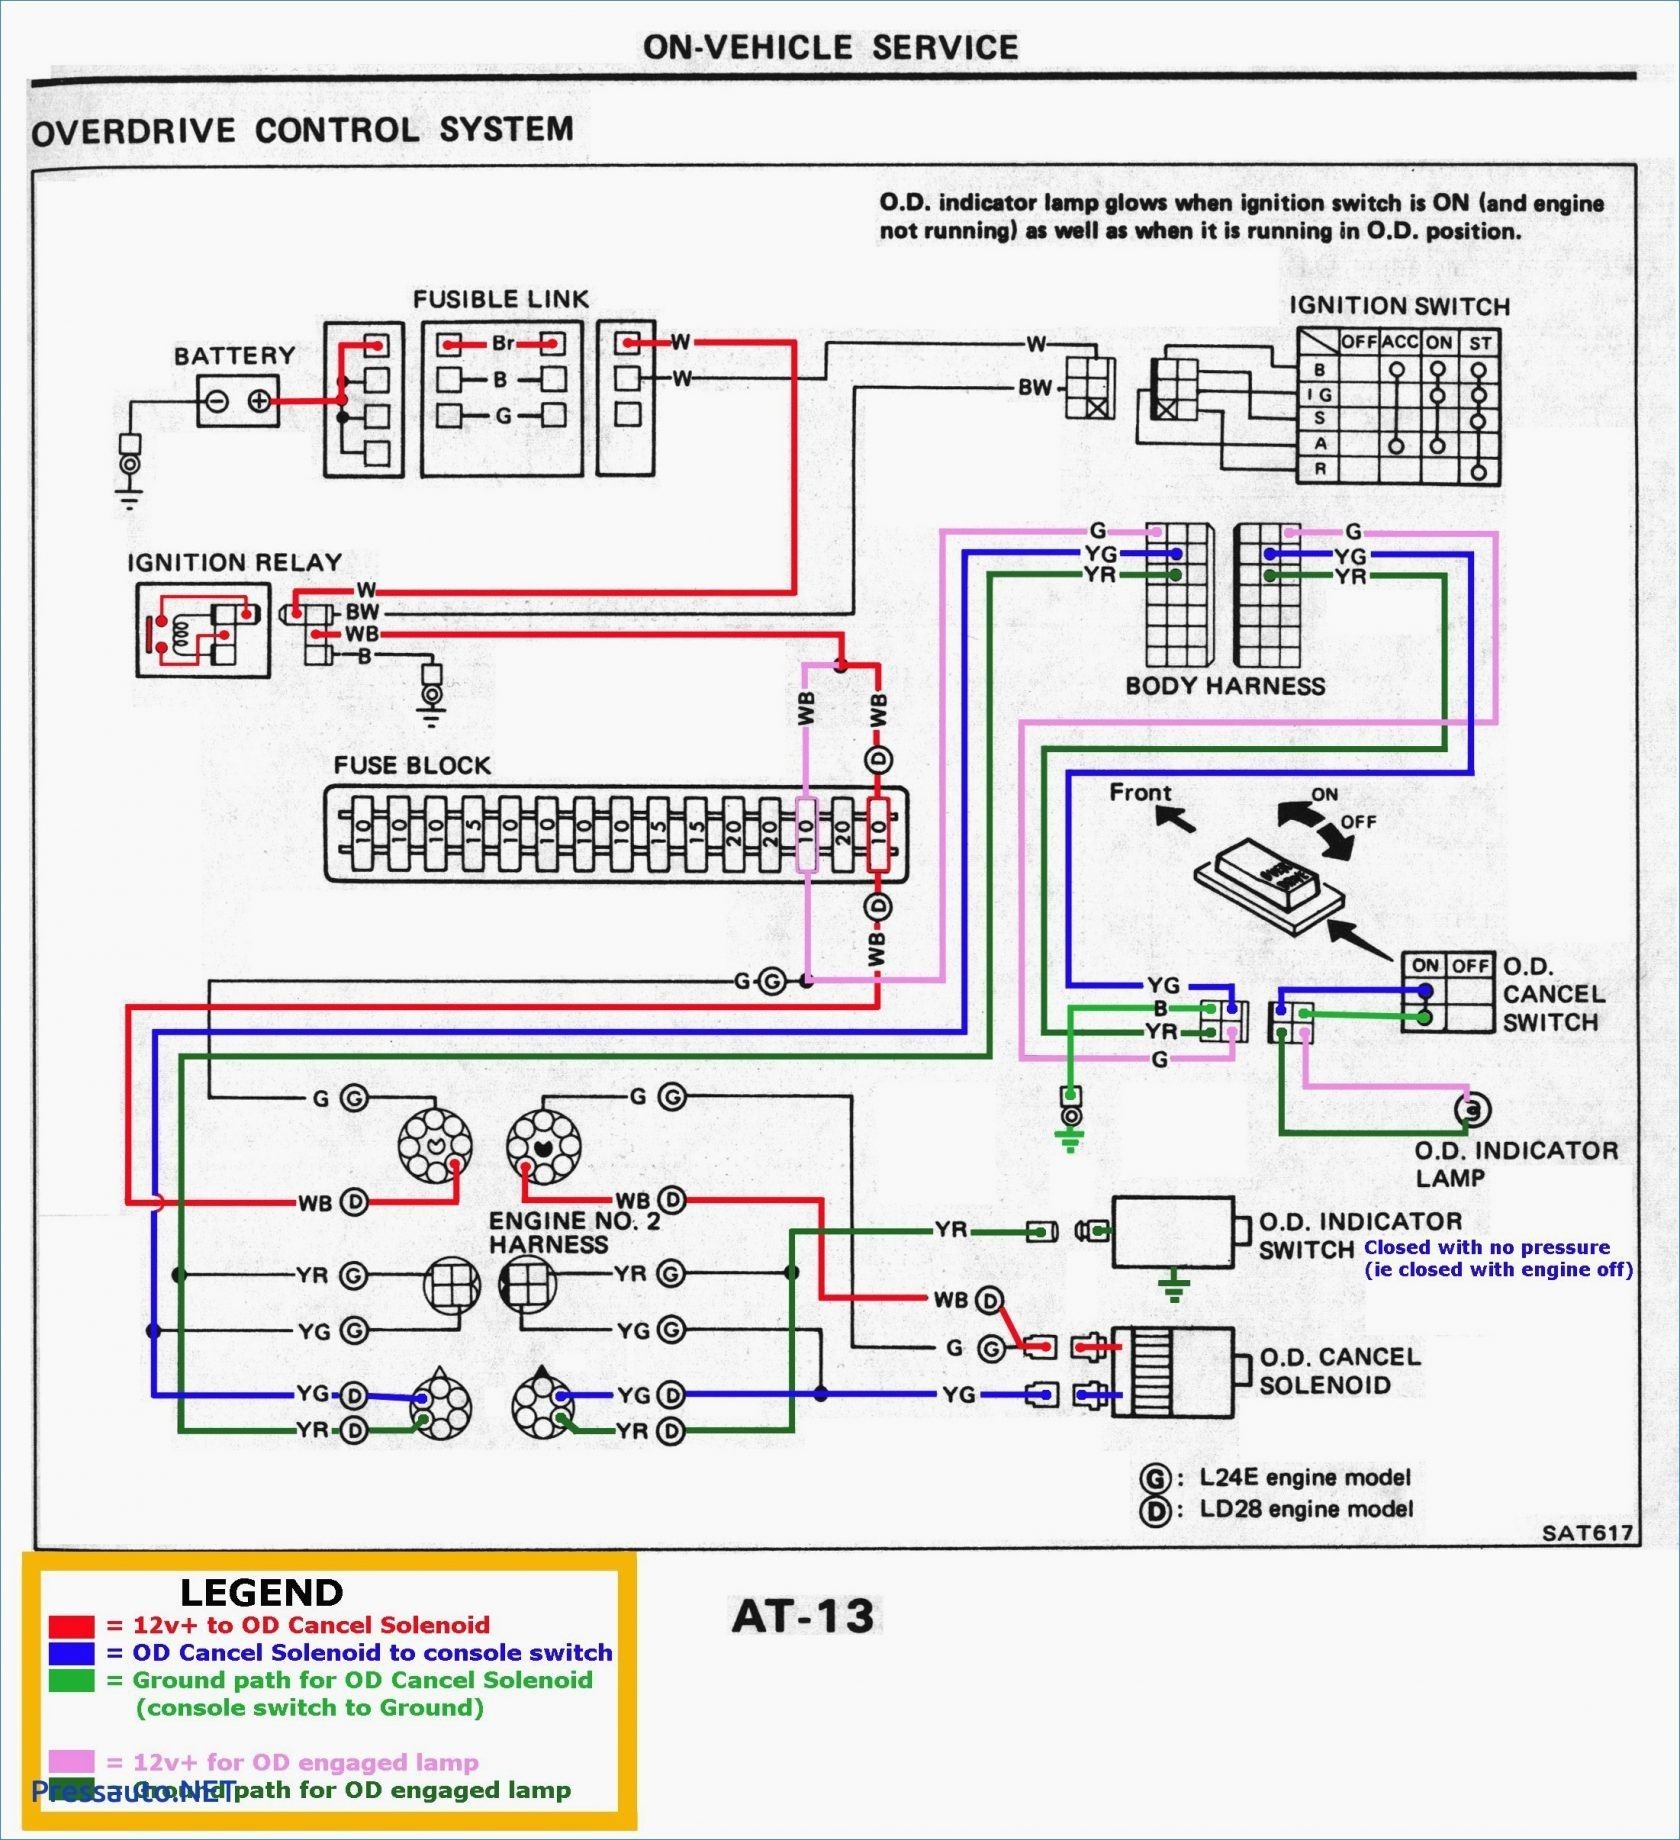 toyota wiring diagram wiring diagram go toyota wiring diagram pdf fujitsu ten diagram wirings